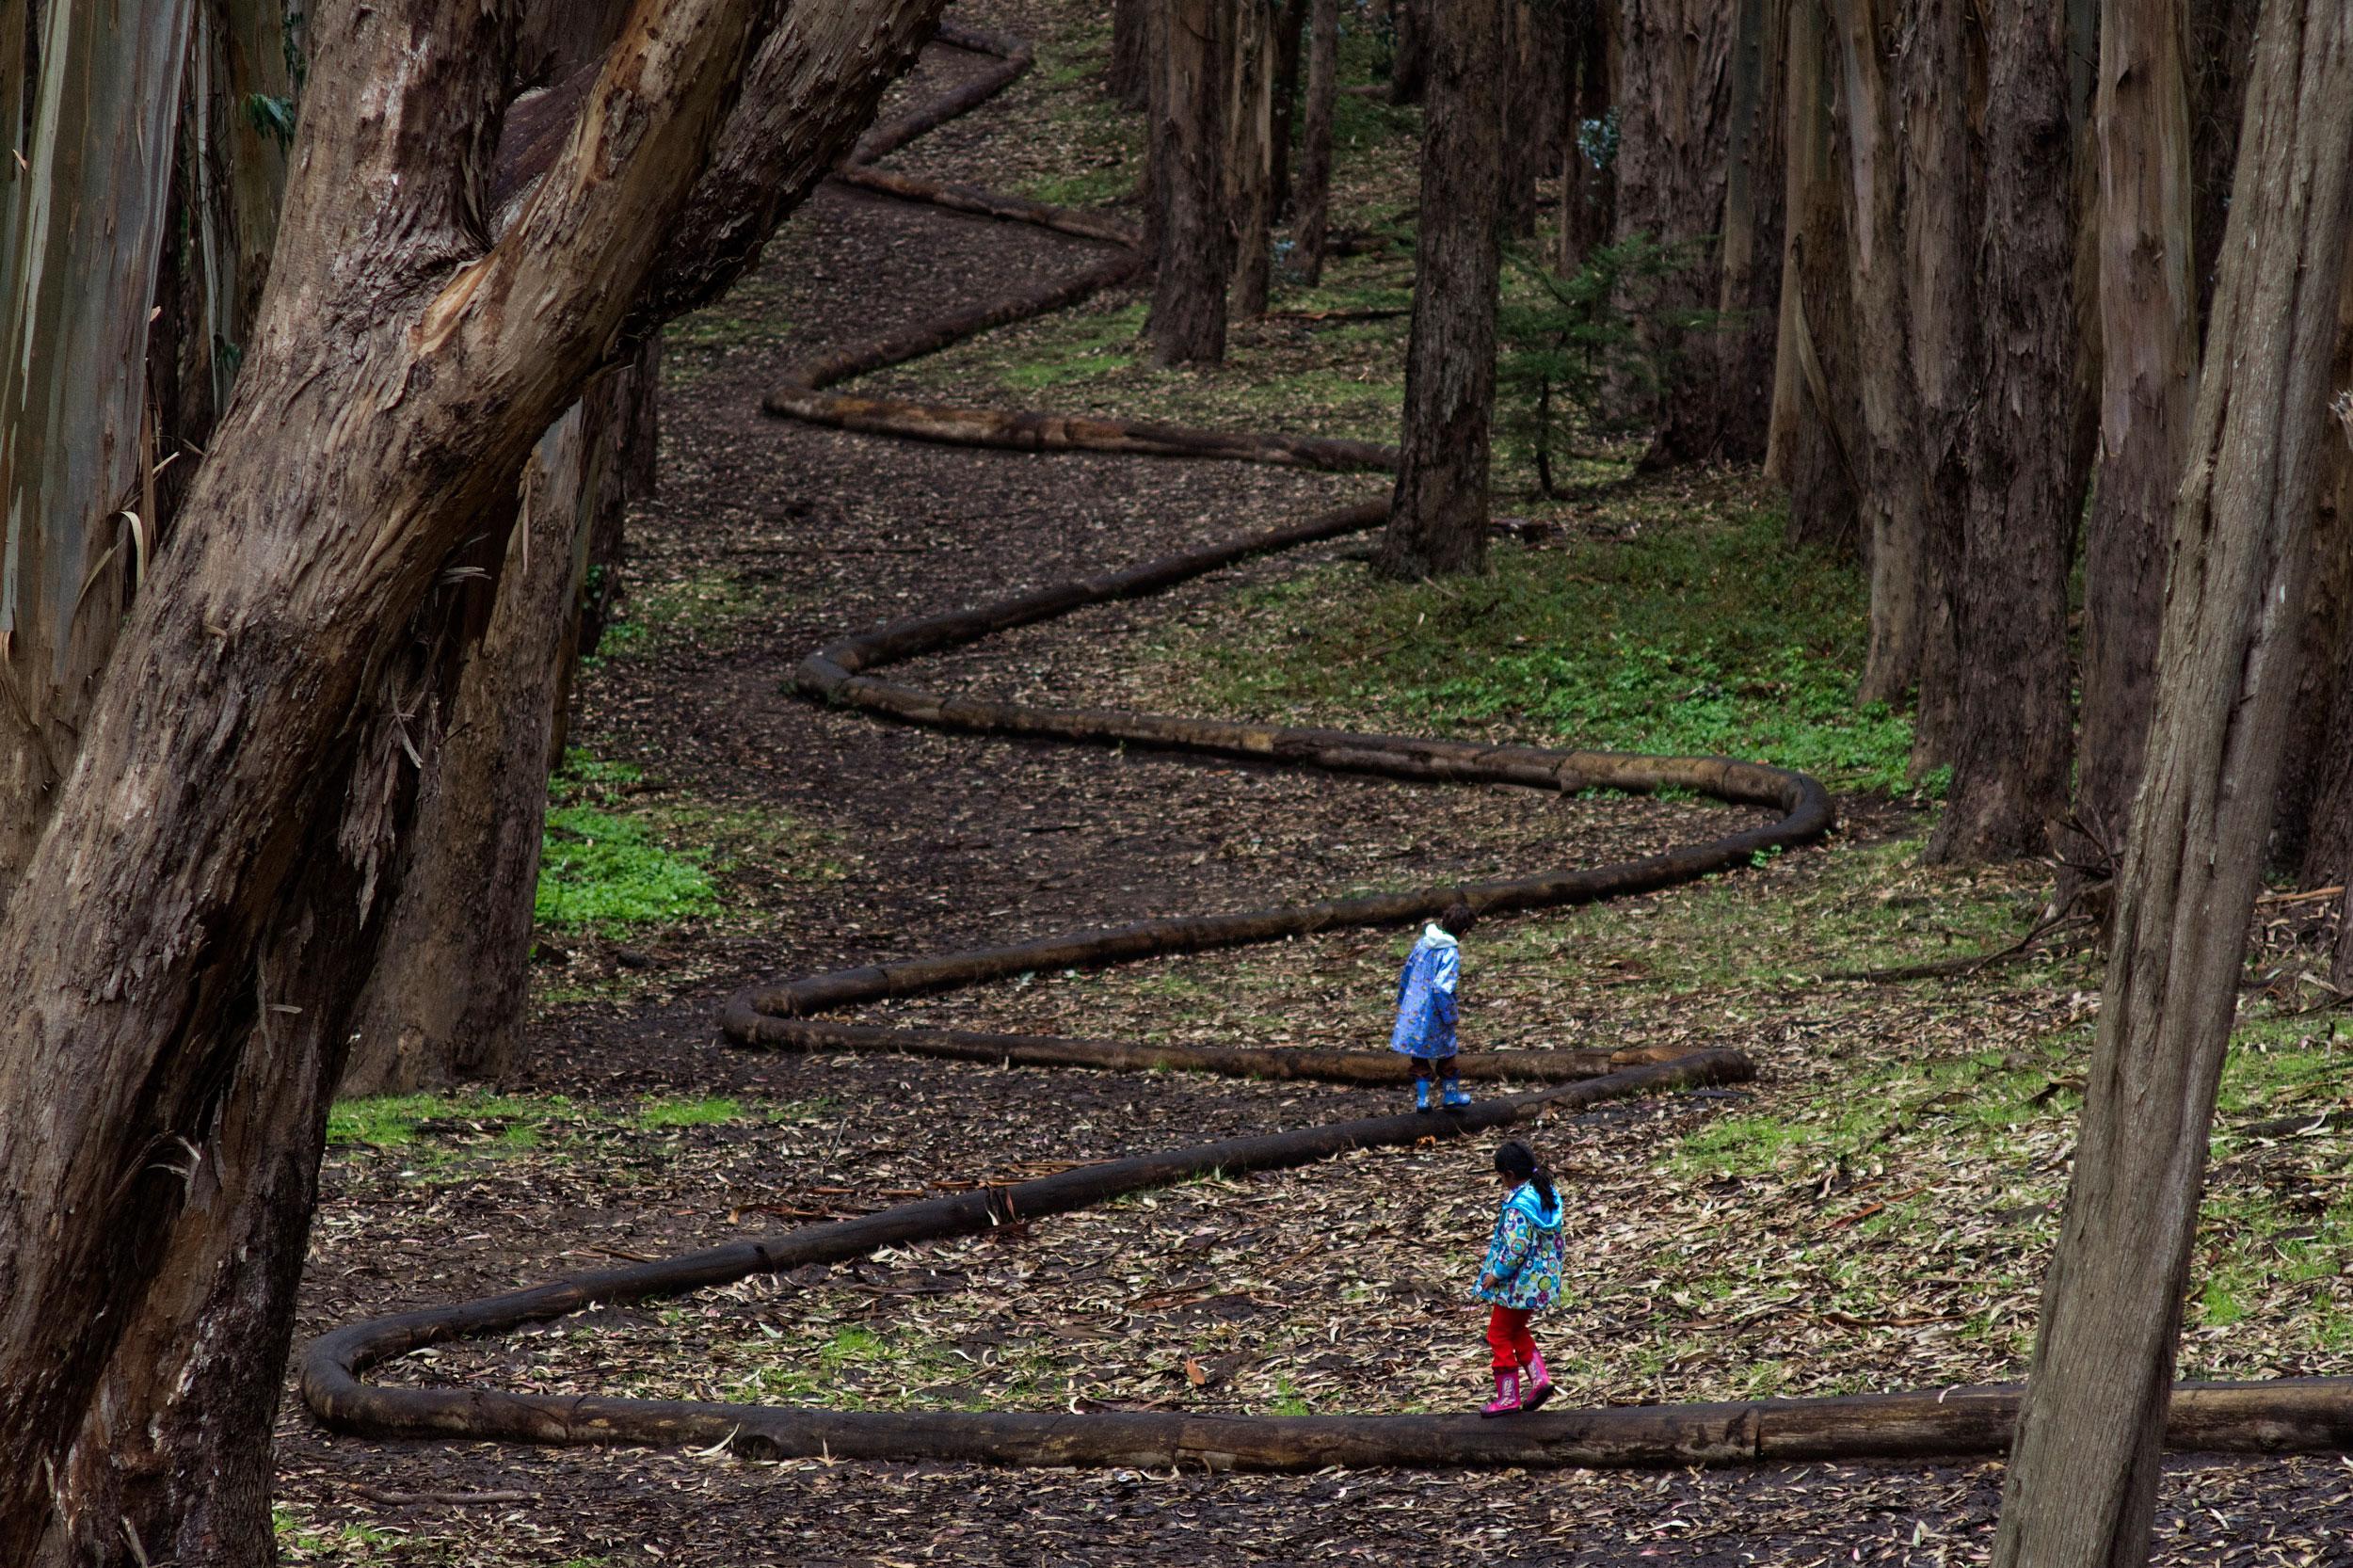 A couple kids in rainwear walking on Wood Line between tall trees